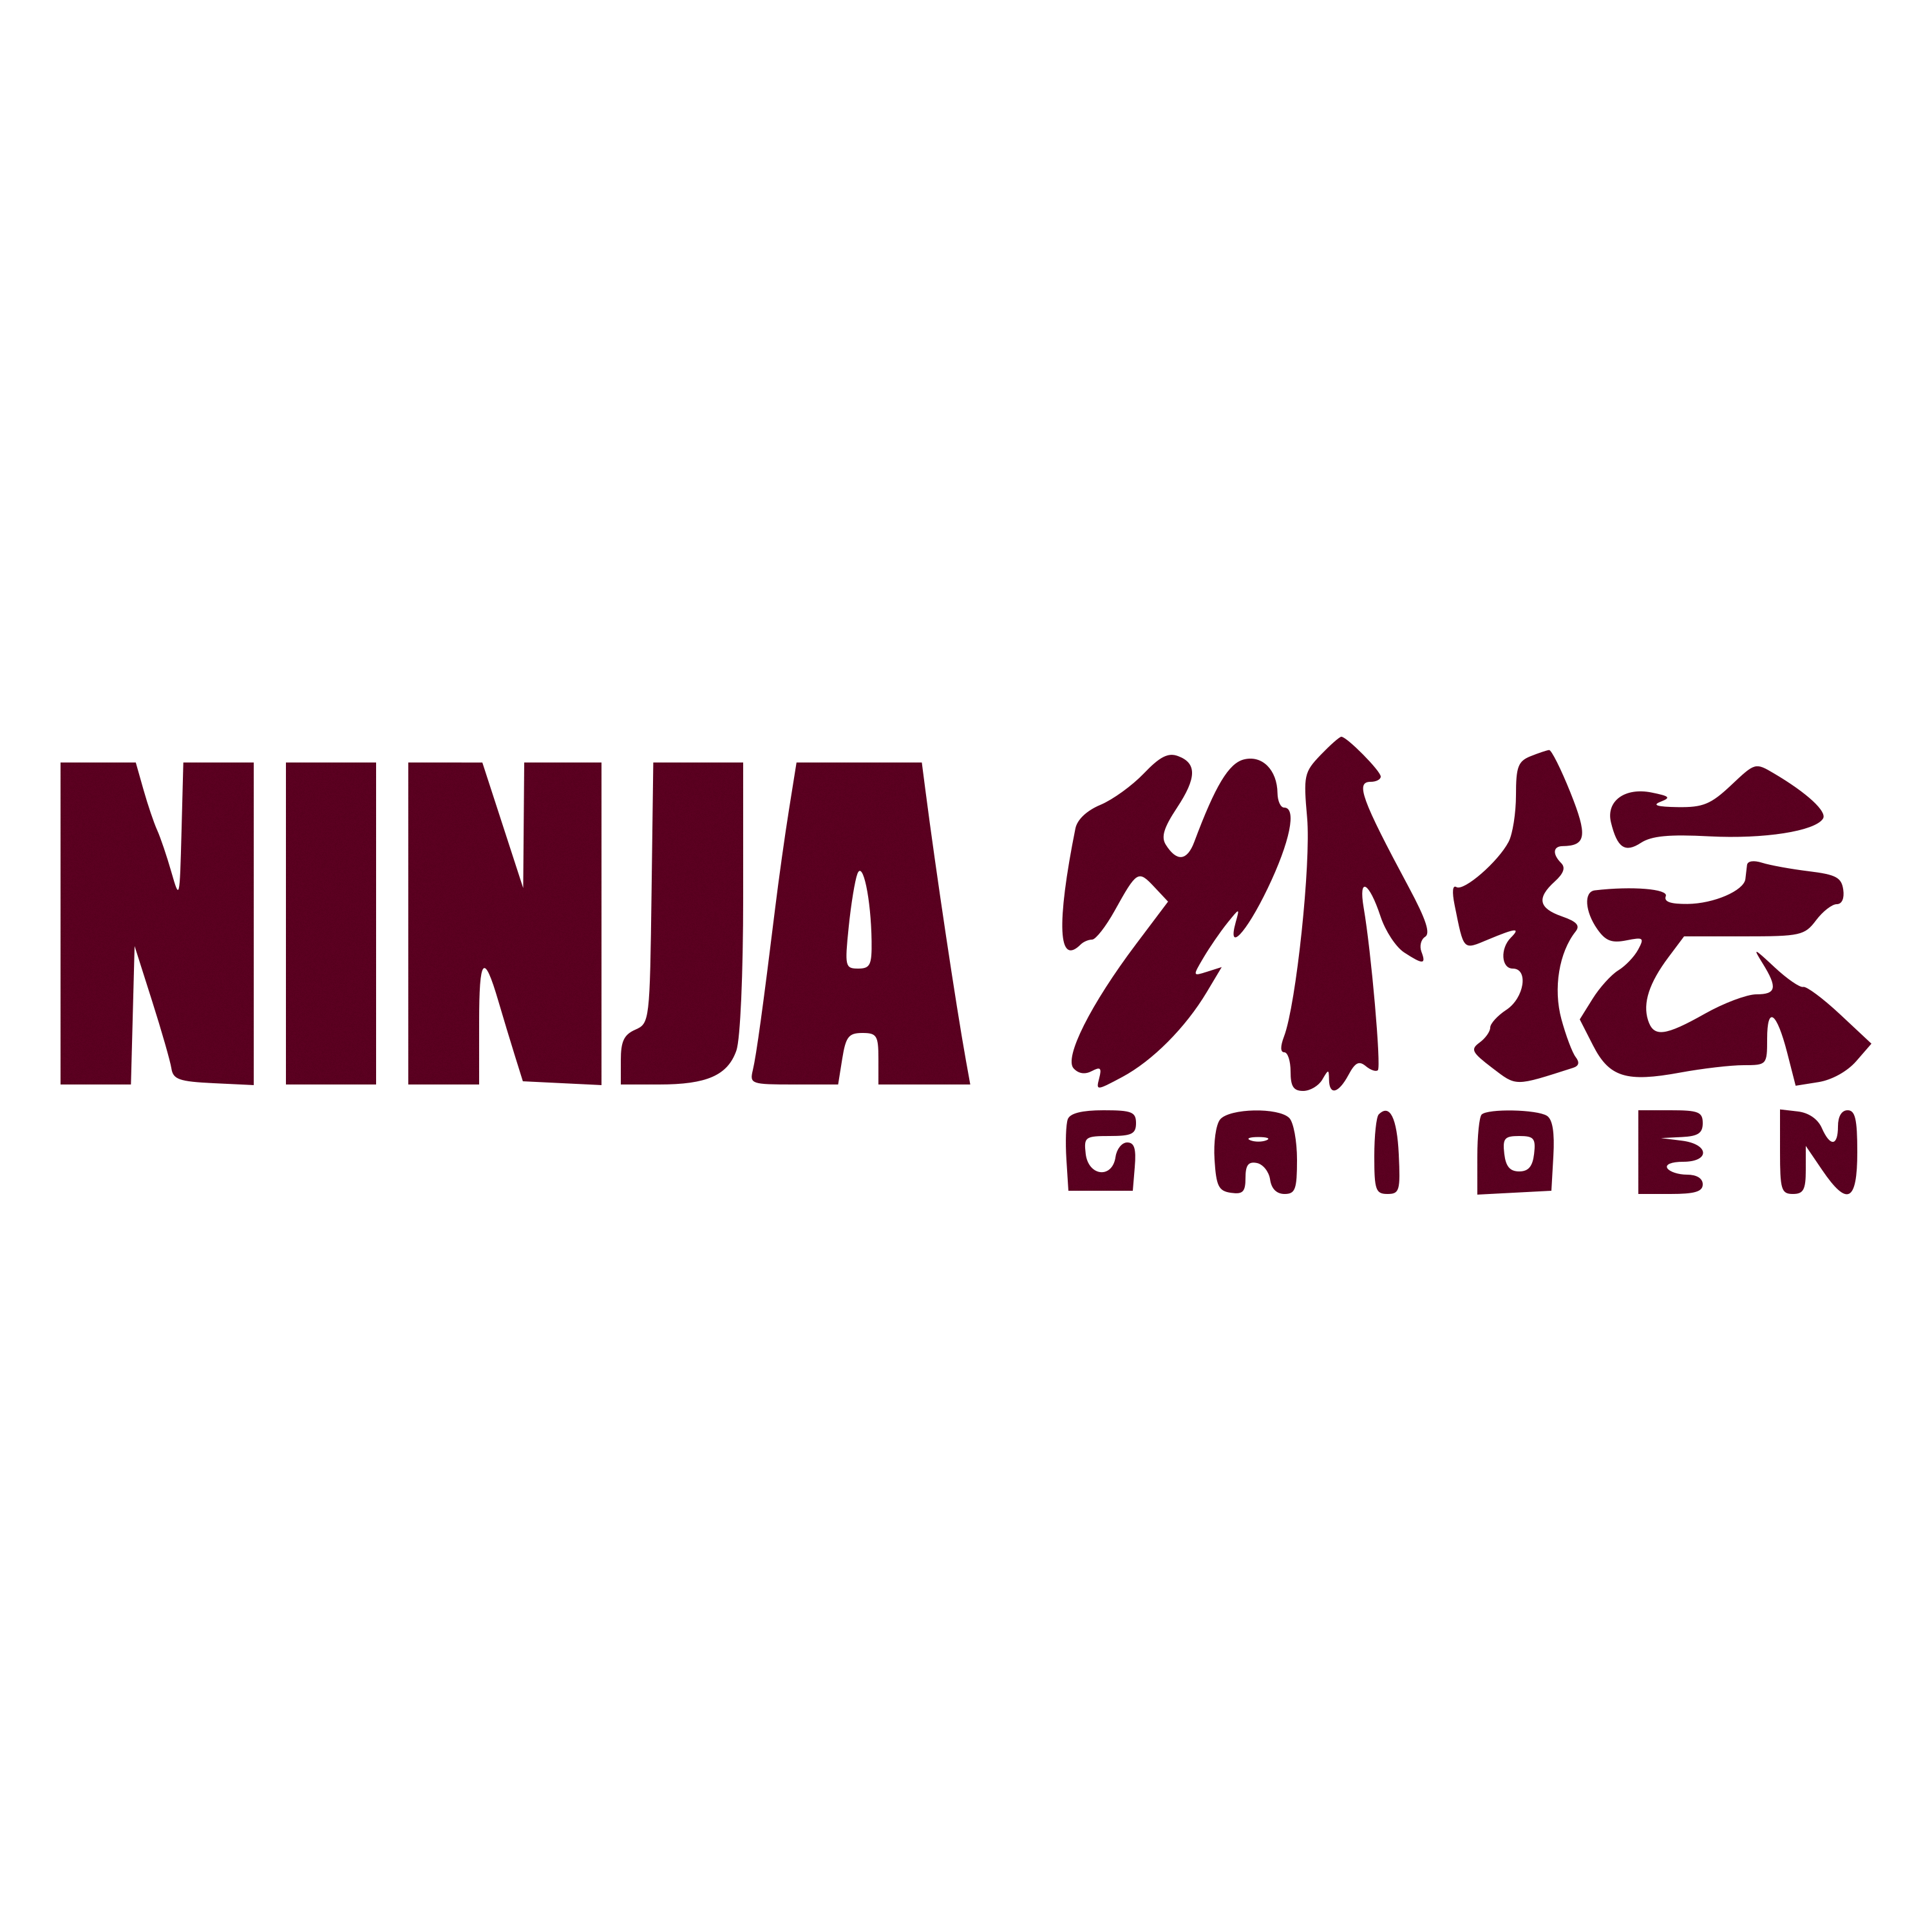 Ninja Gaiden Logo Transparent Picture